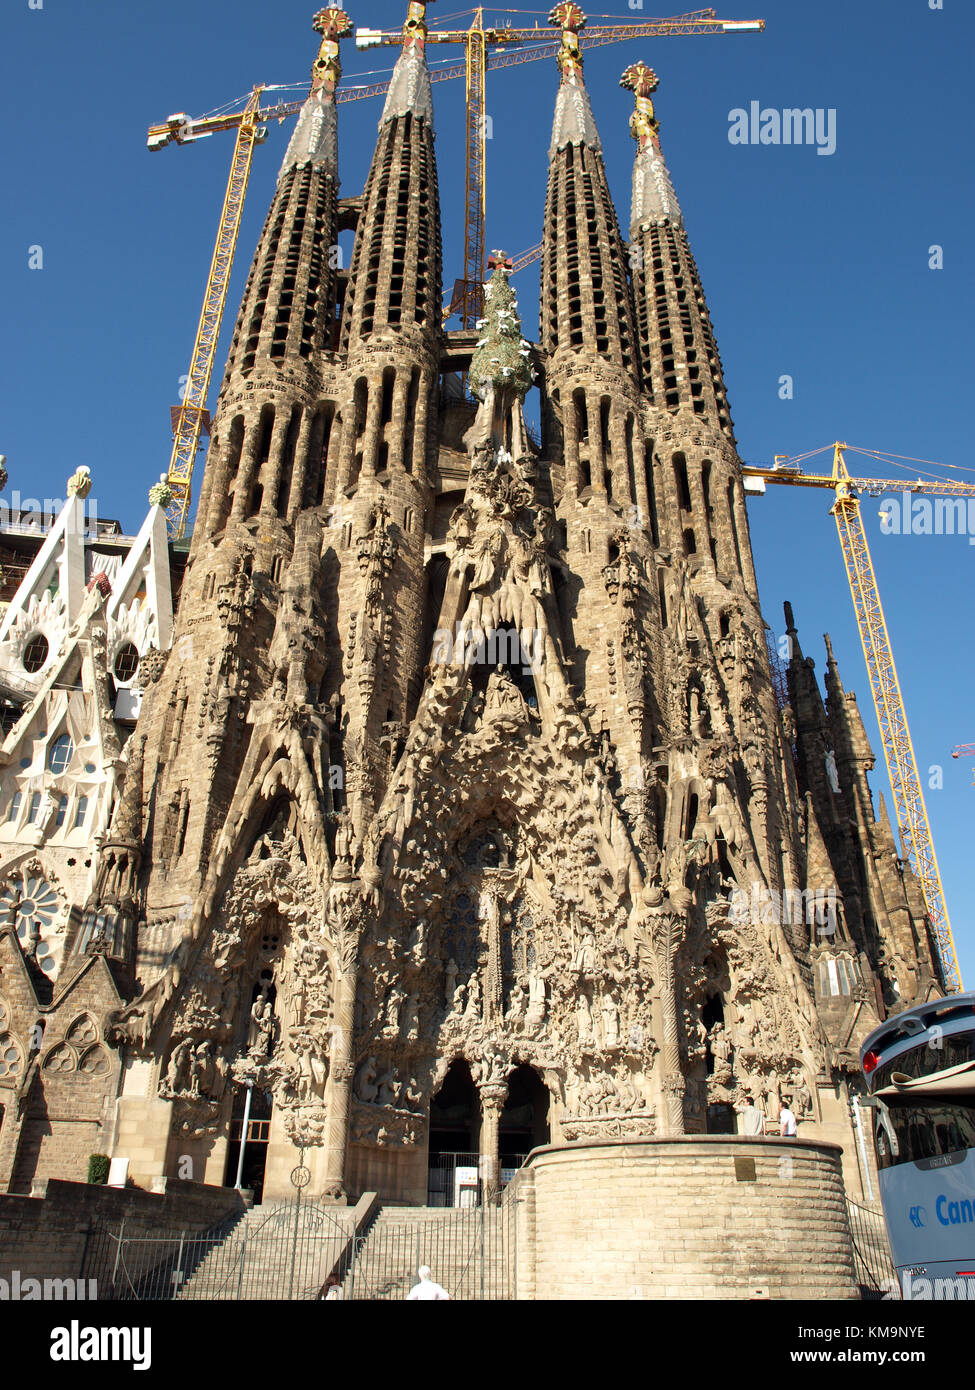 Barcelona, Spain - La Sagrada Familia - the impressive cathedral ...